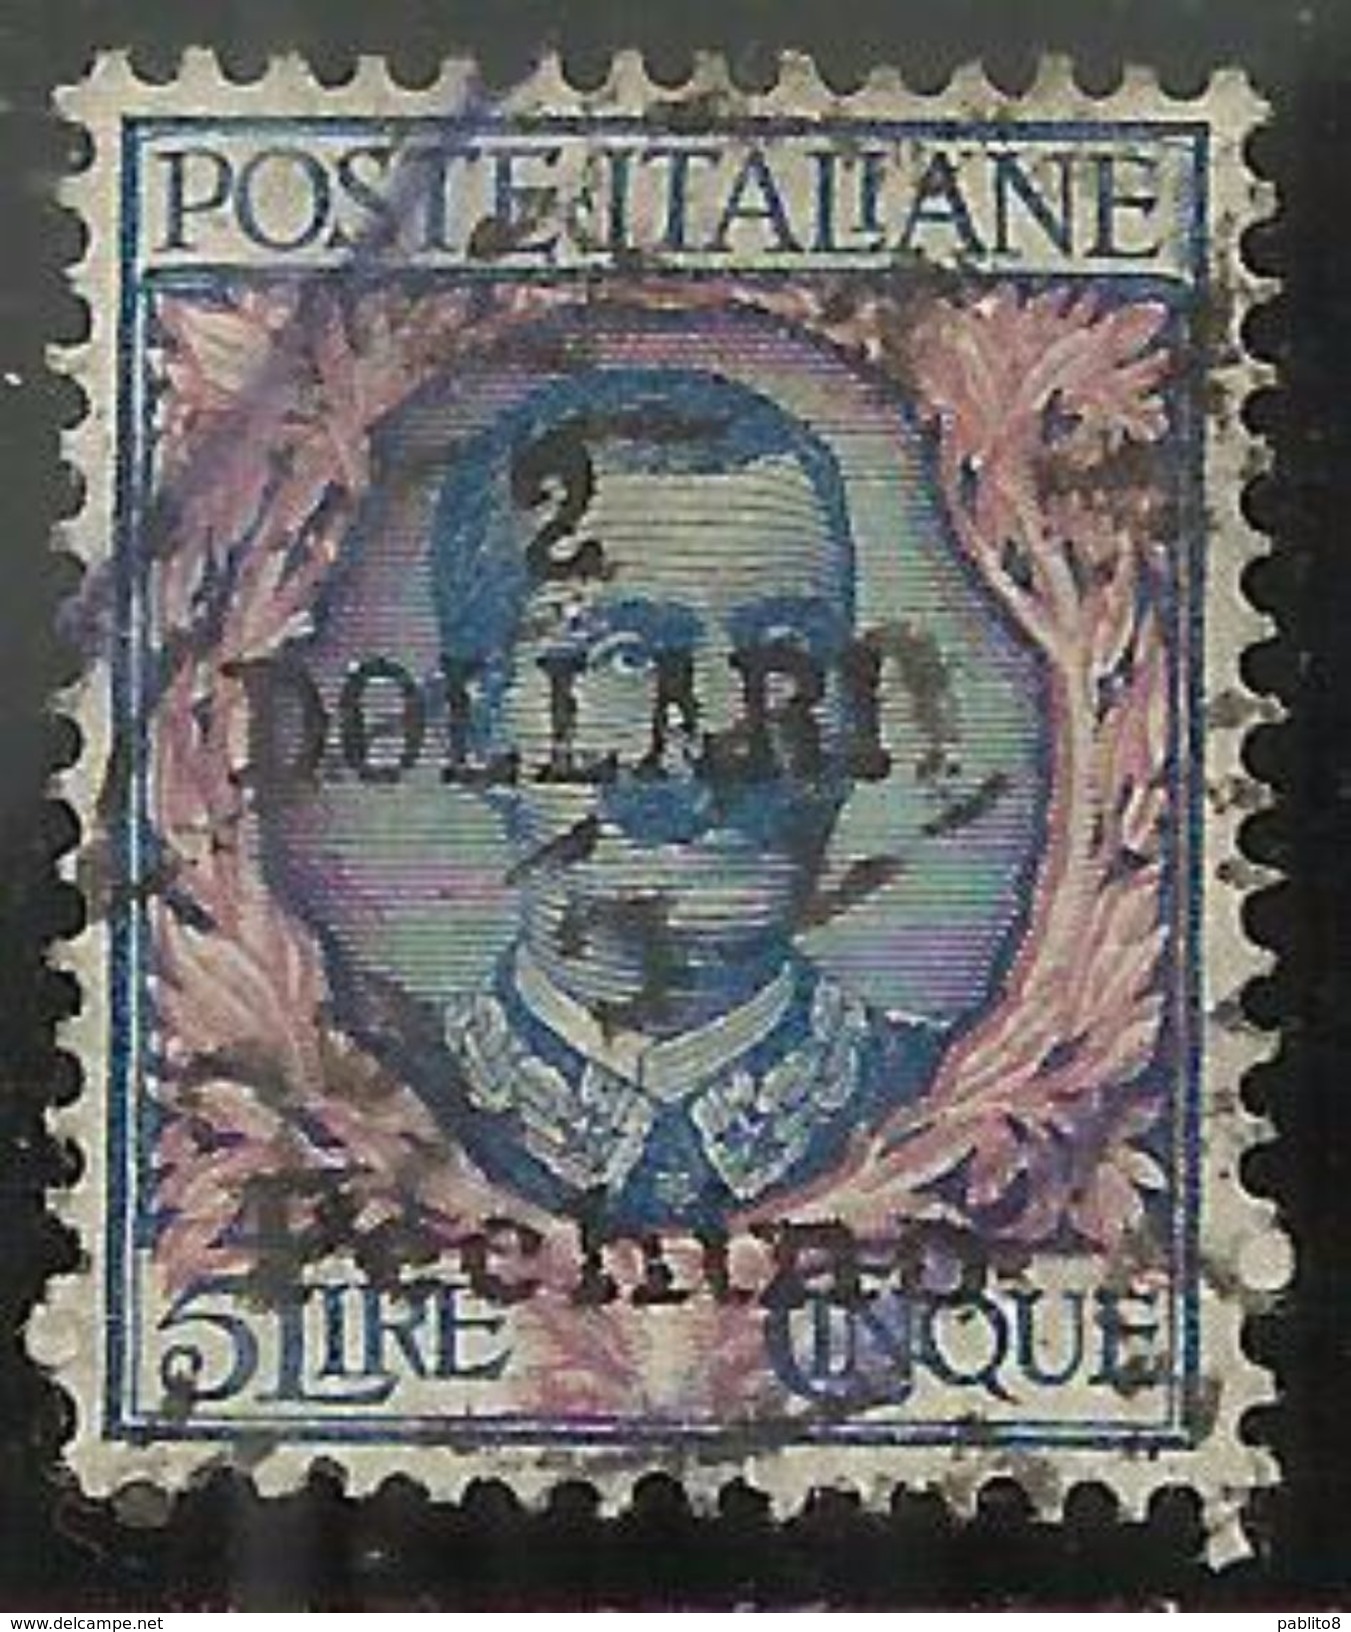 PECHINO BEIJING 1919 1920 SOPRASTAMPATO D'ITALIA ITALY OVERPRINTED 2 DOLLARI DOLLARS SU LIRE 5 USATO USED CERTIFICATO - Pékin